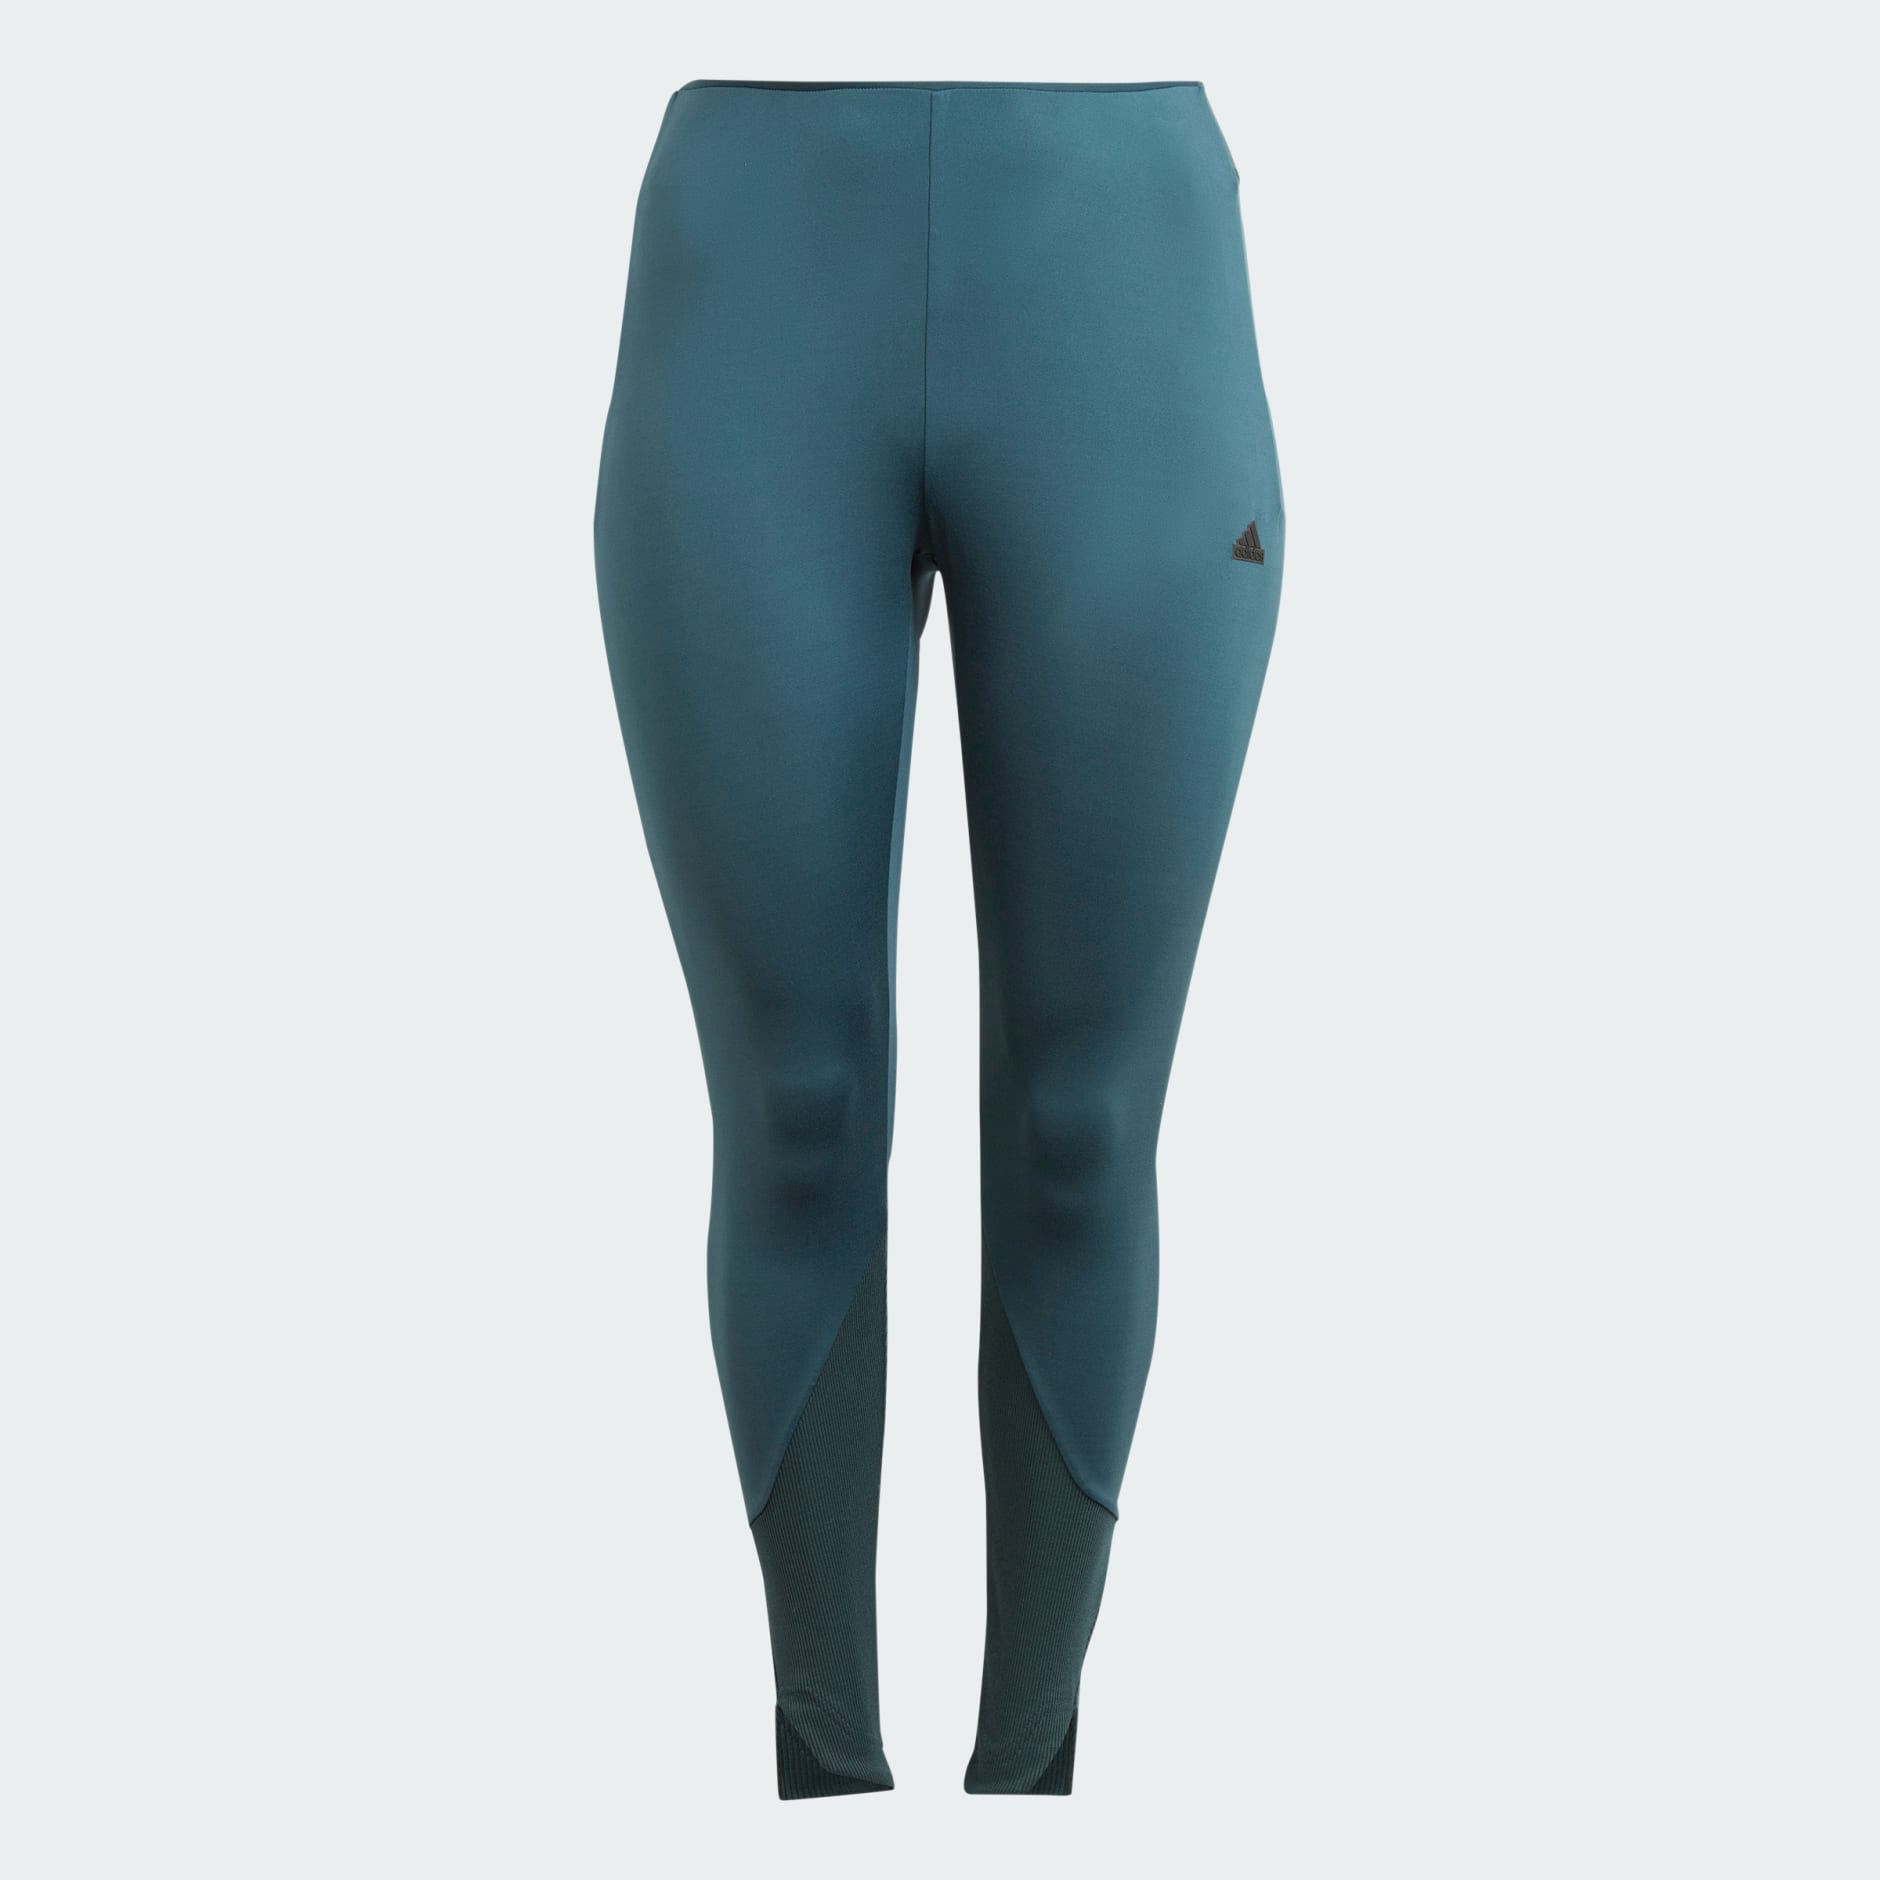 Clothing - Z.N.E. Leggings (Plus Size) - Turquoise